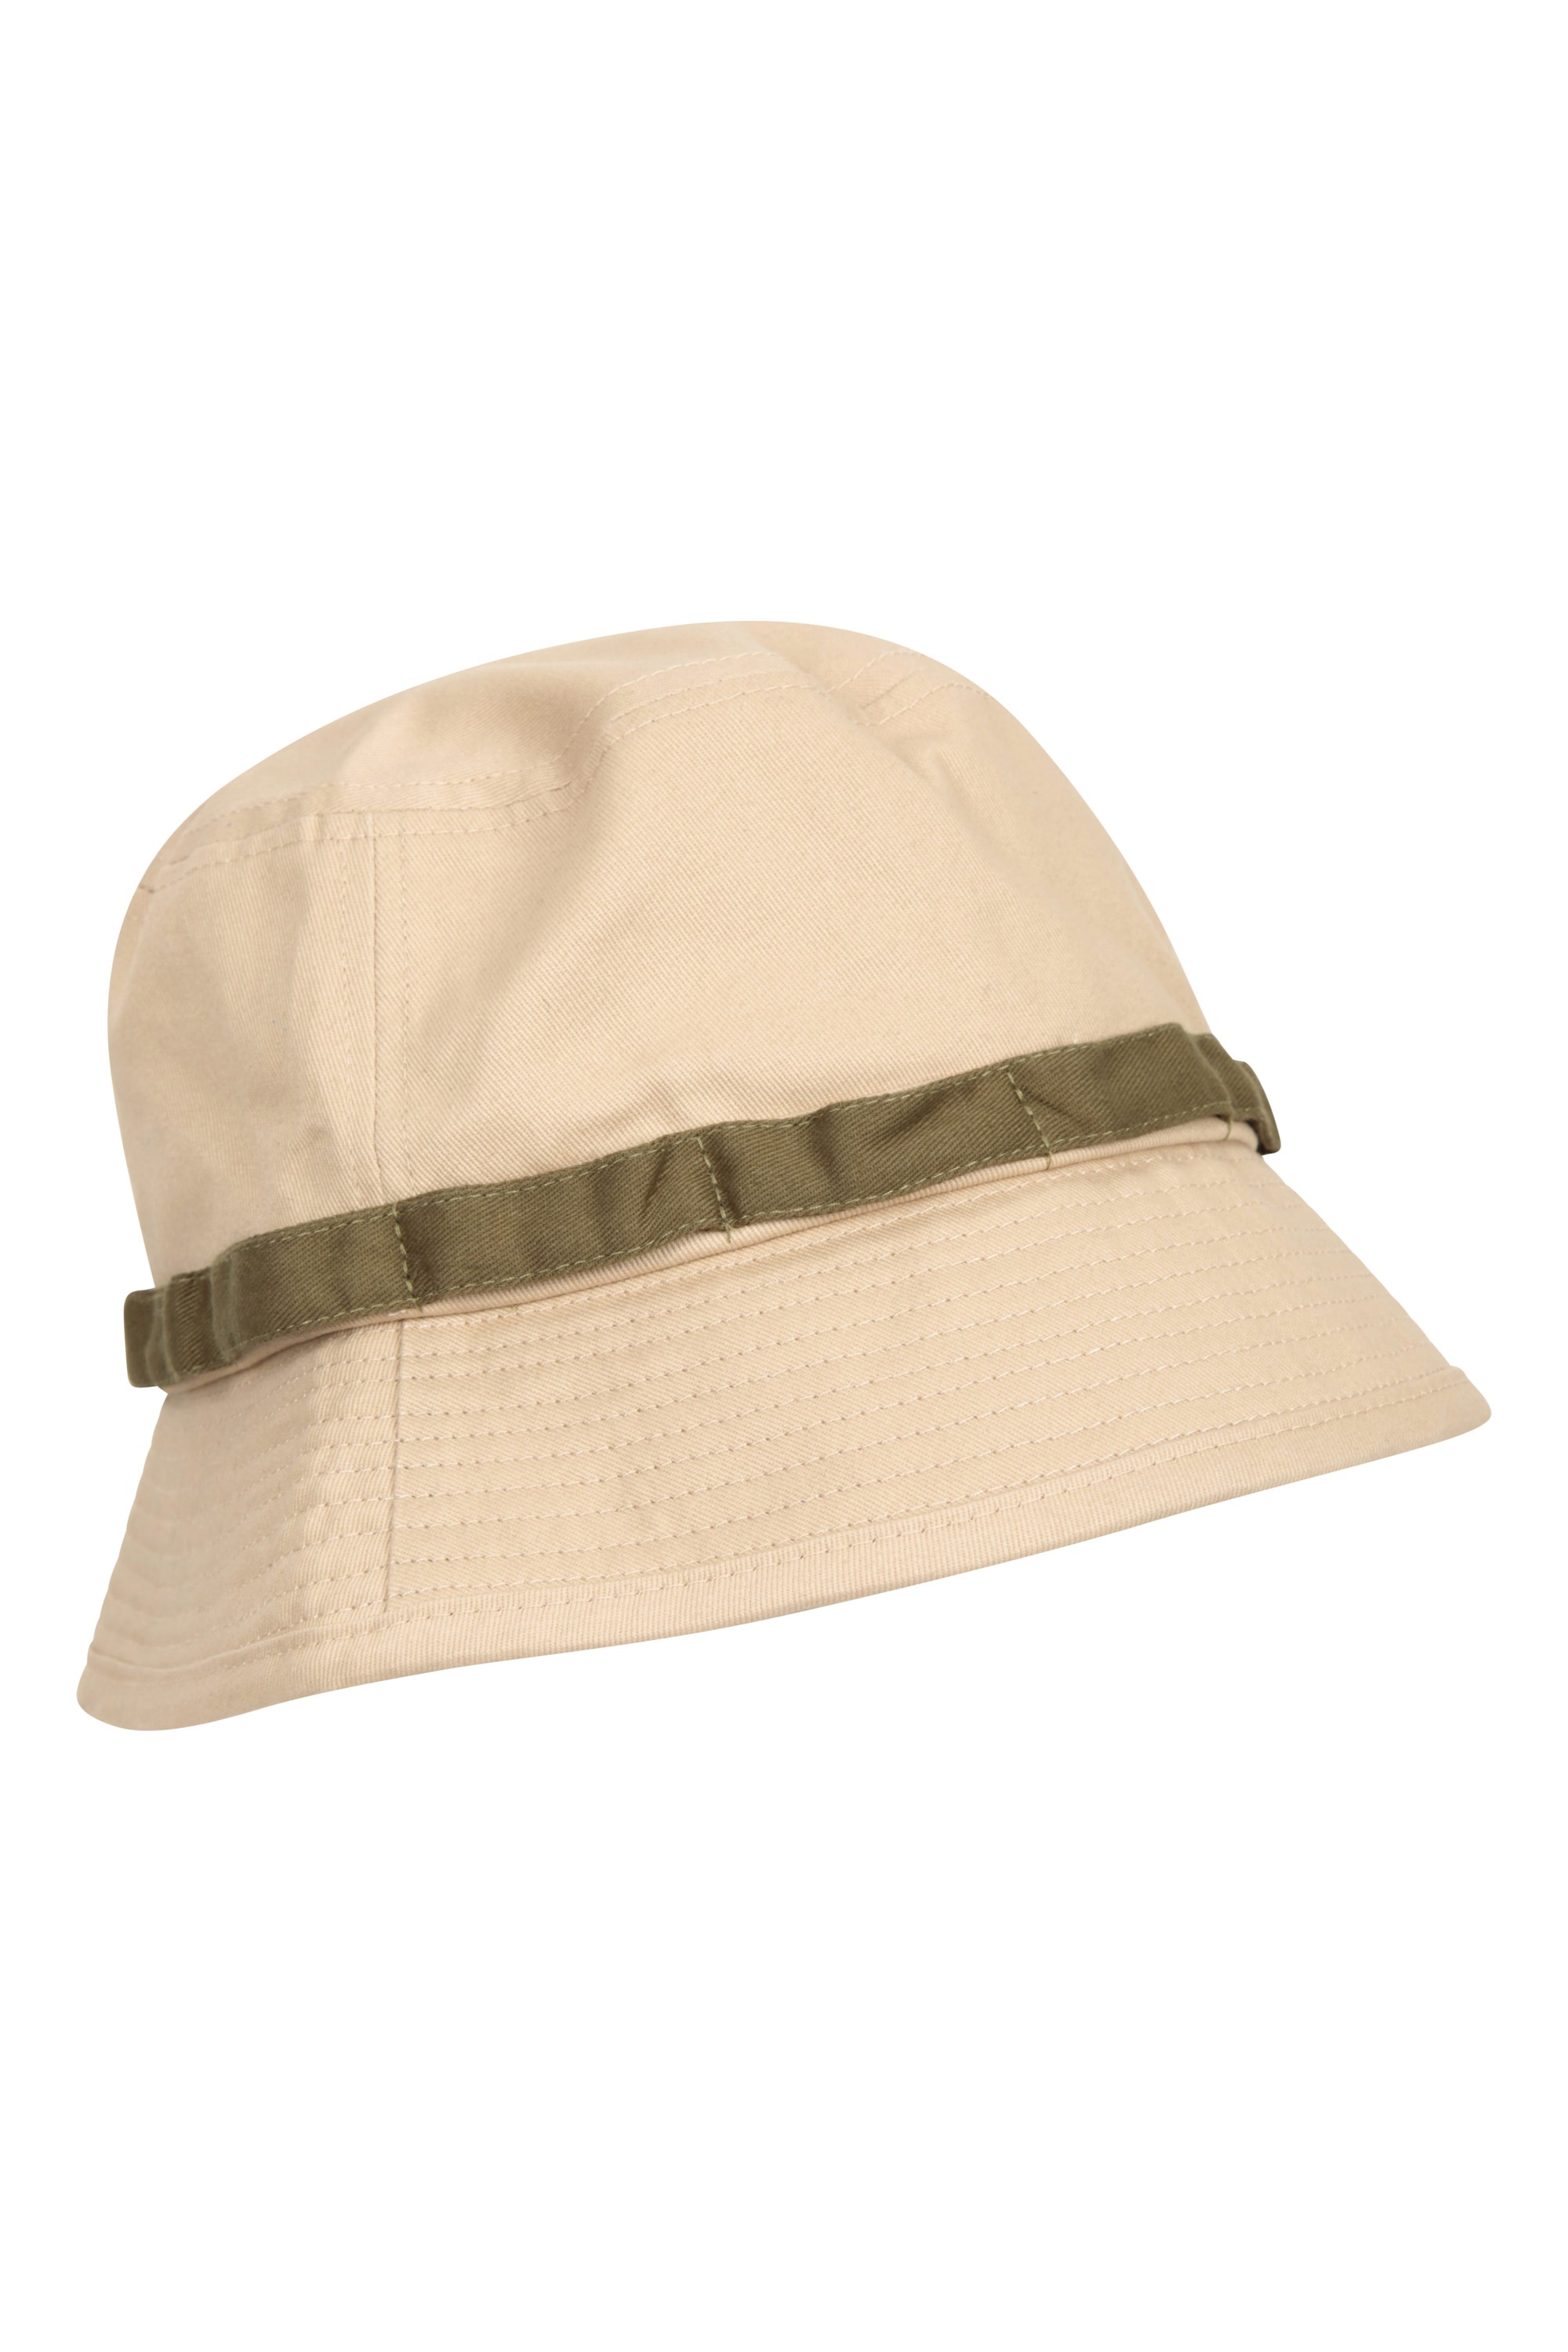 Mountain Warehouse Mens Fisherman Bucket Hat - Green | Size ONE